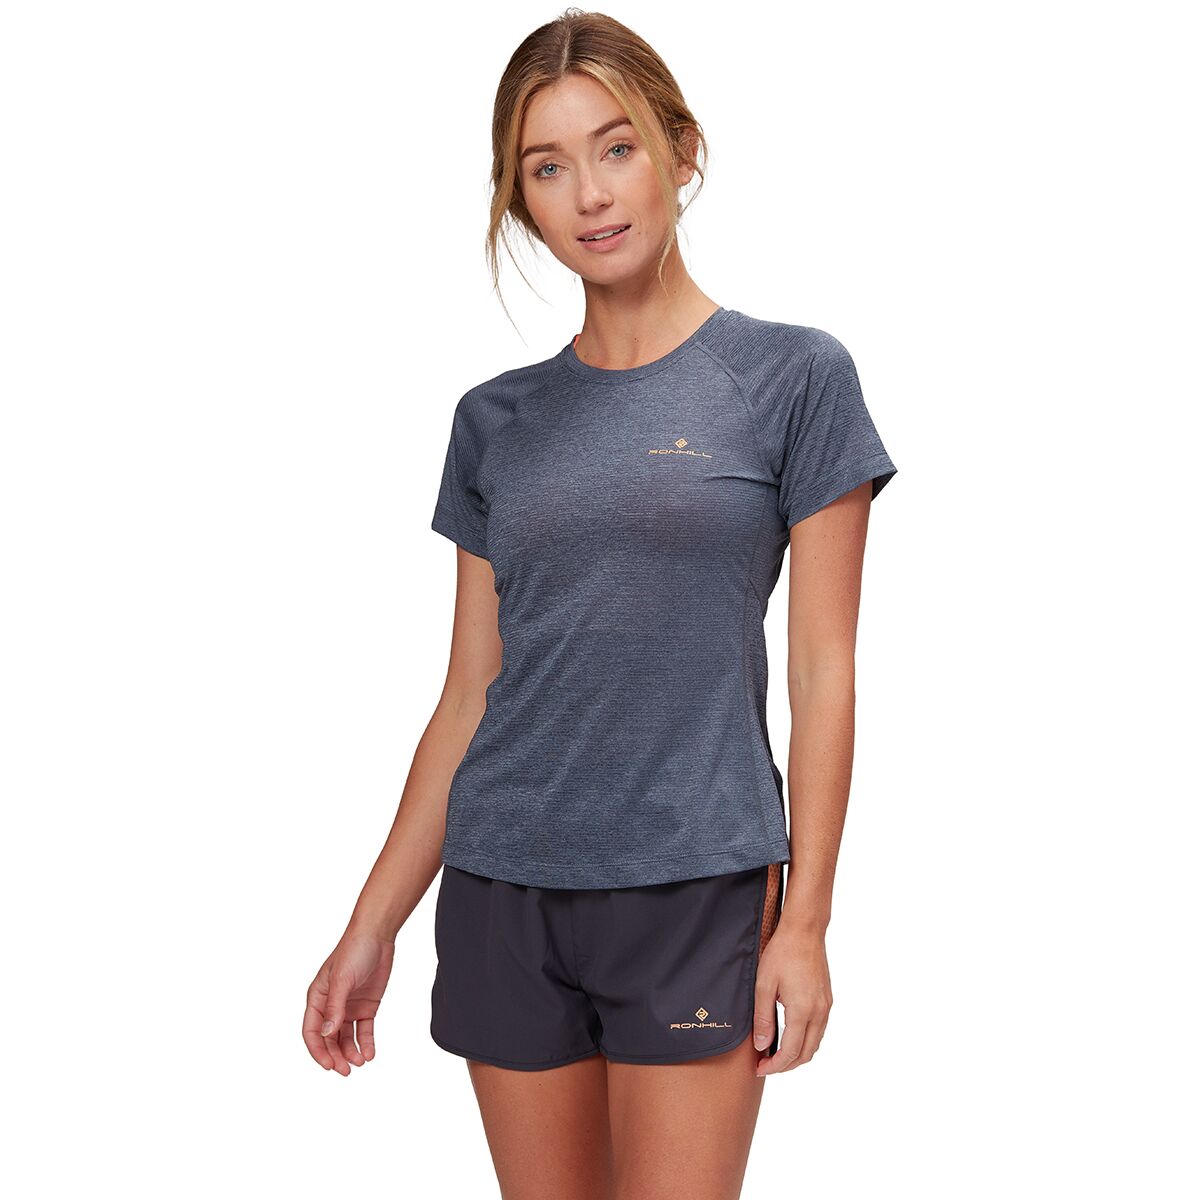 Ron Hill Momentum Short-Sleeve T-Shirt - Women's Charc/Stone/Apricot 16